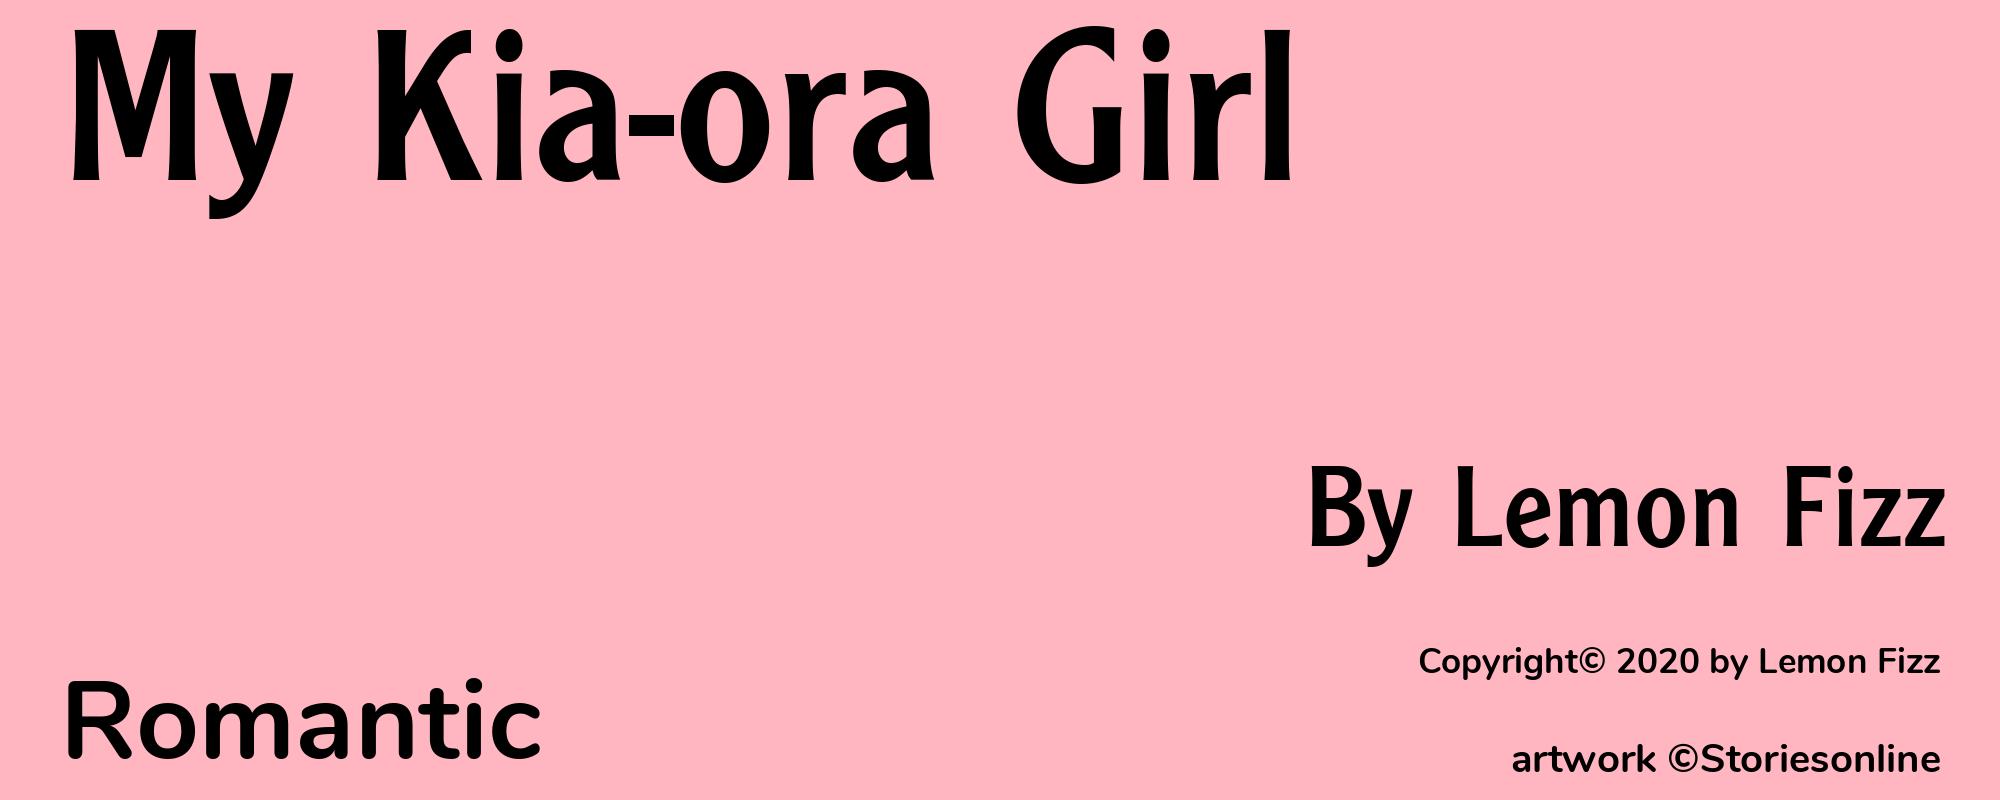 My Kia-ora Girl - Cover